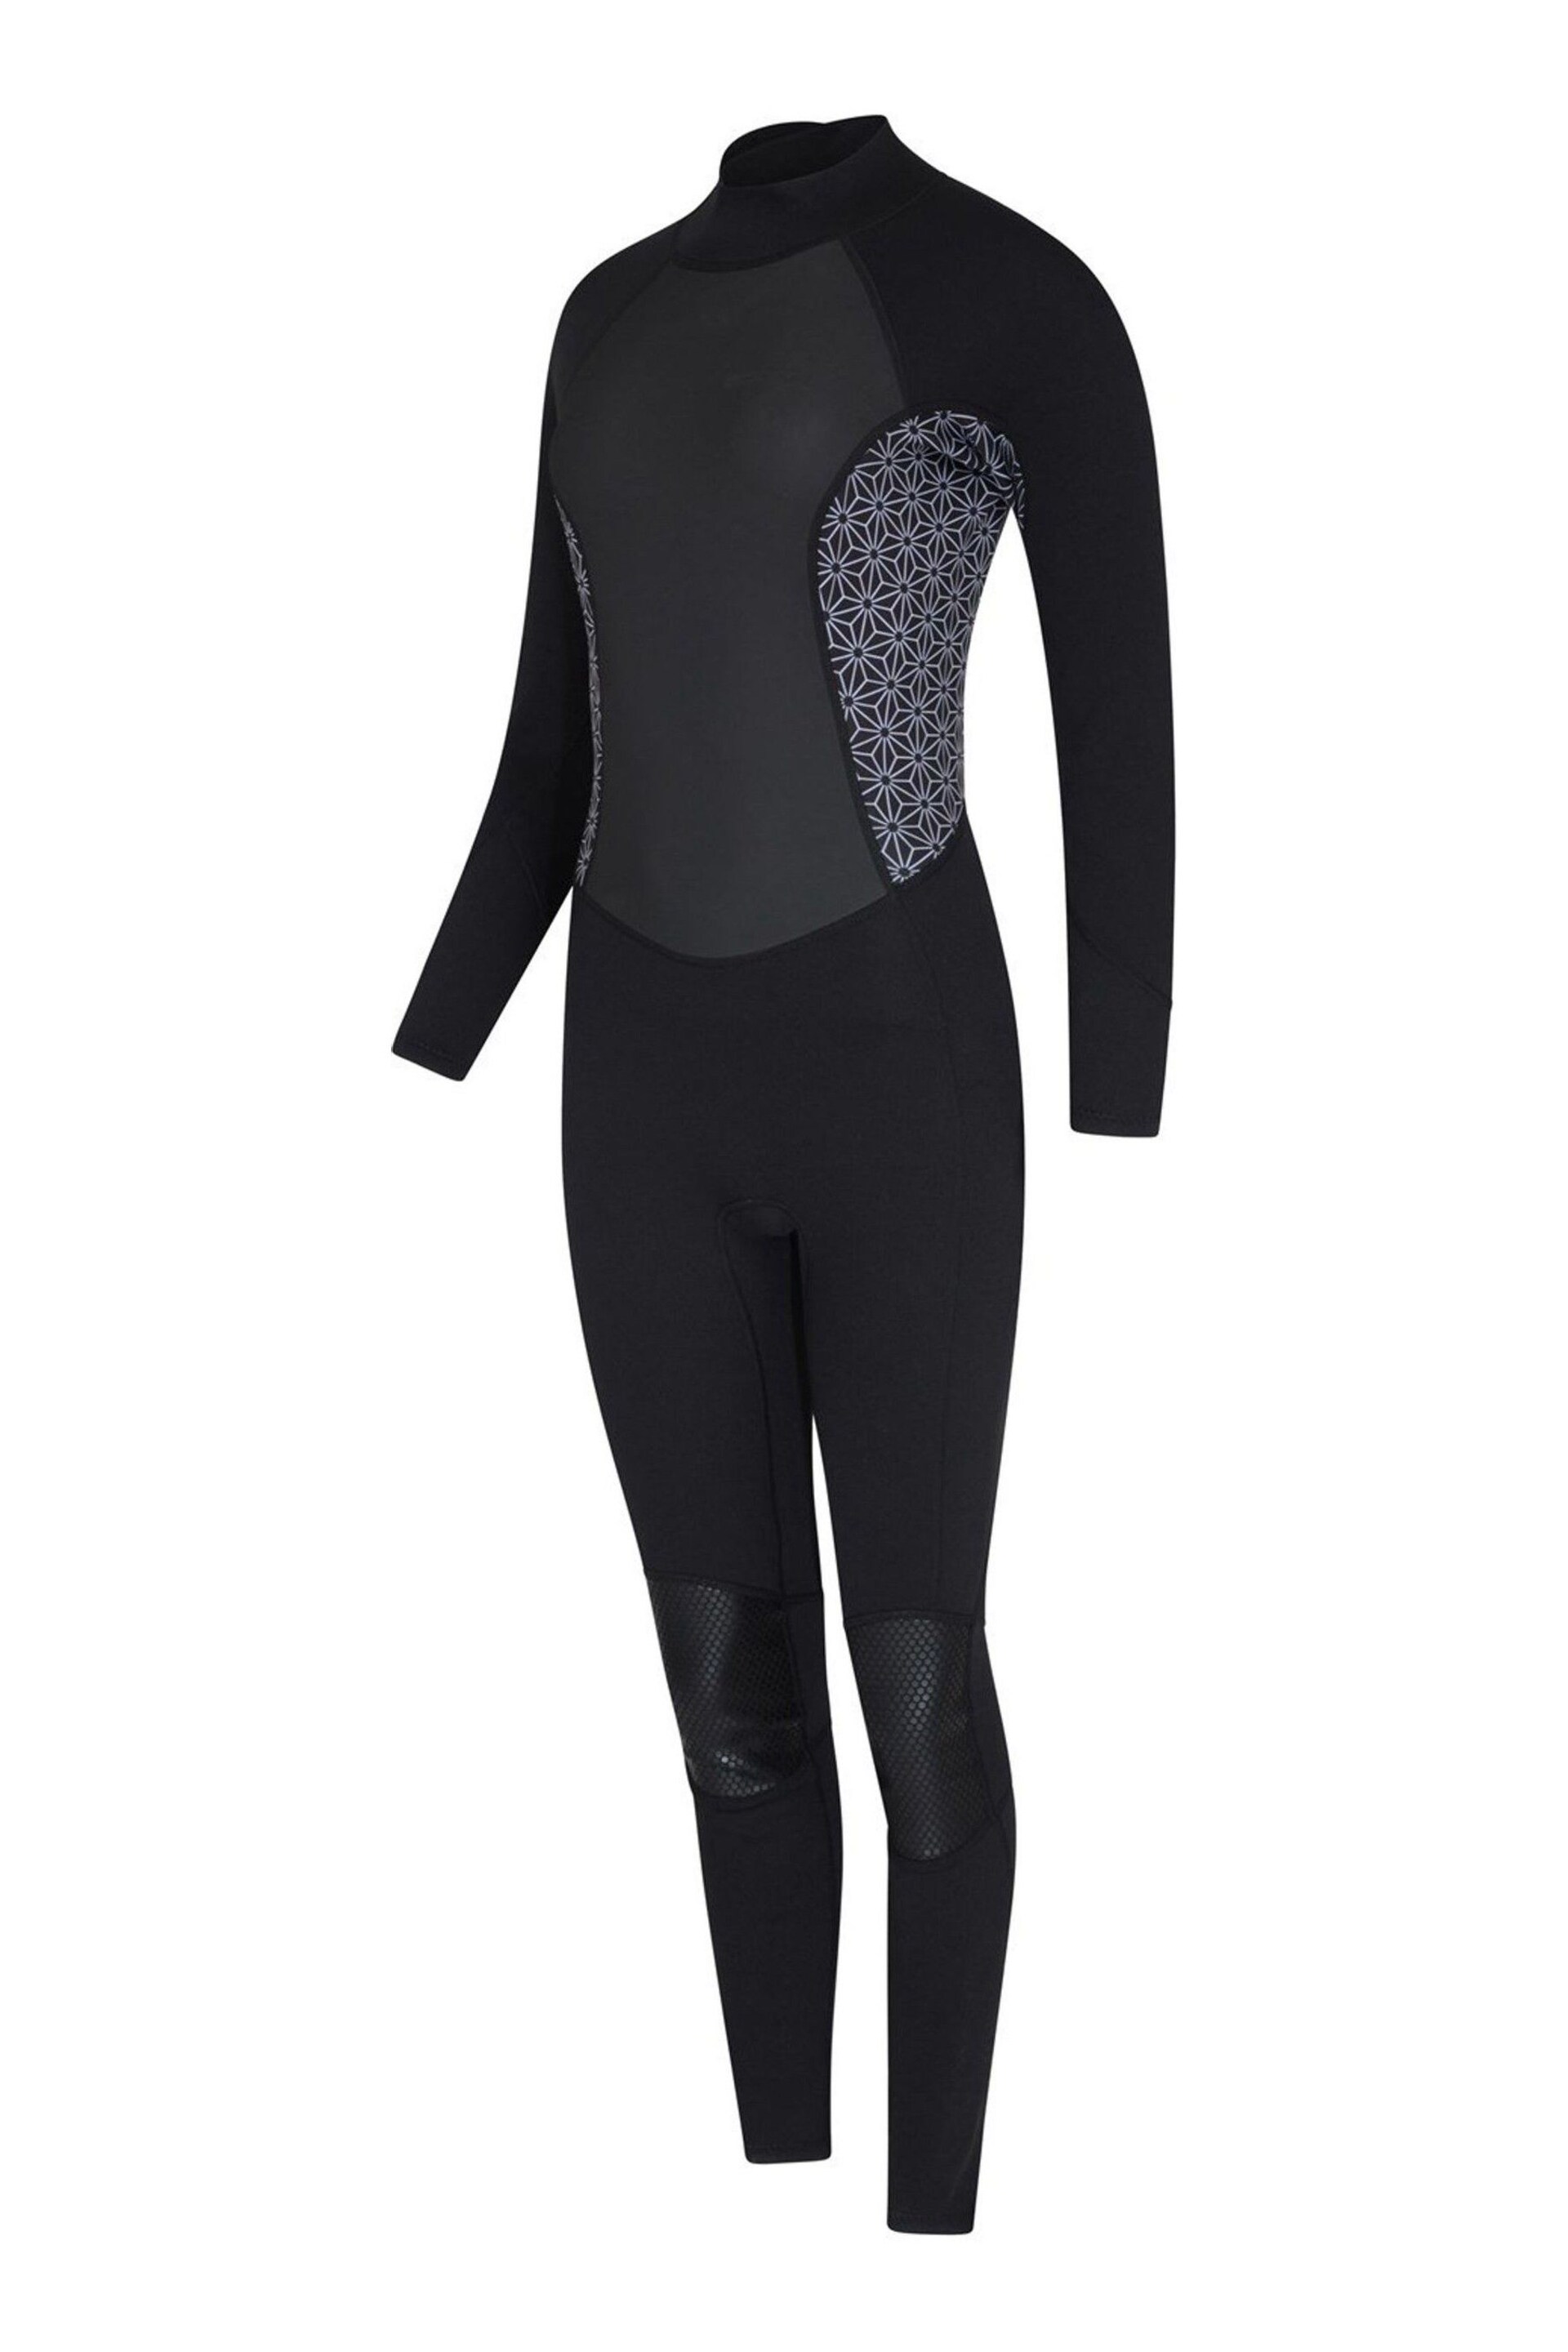 Mountain Warehouse Black Printed Womens Full Length Neoprene Wetsuit - Image 3 of 4